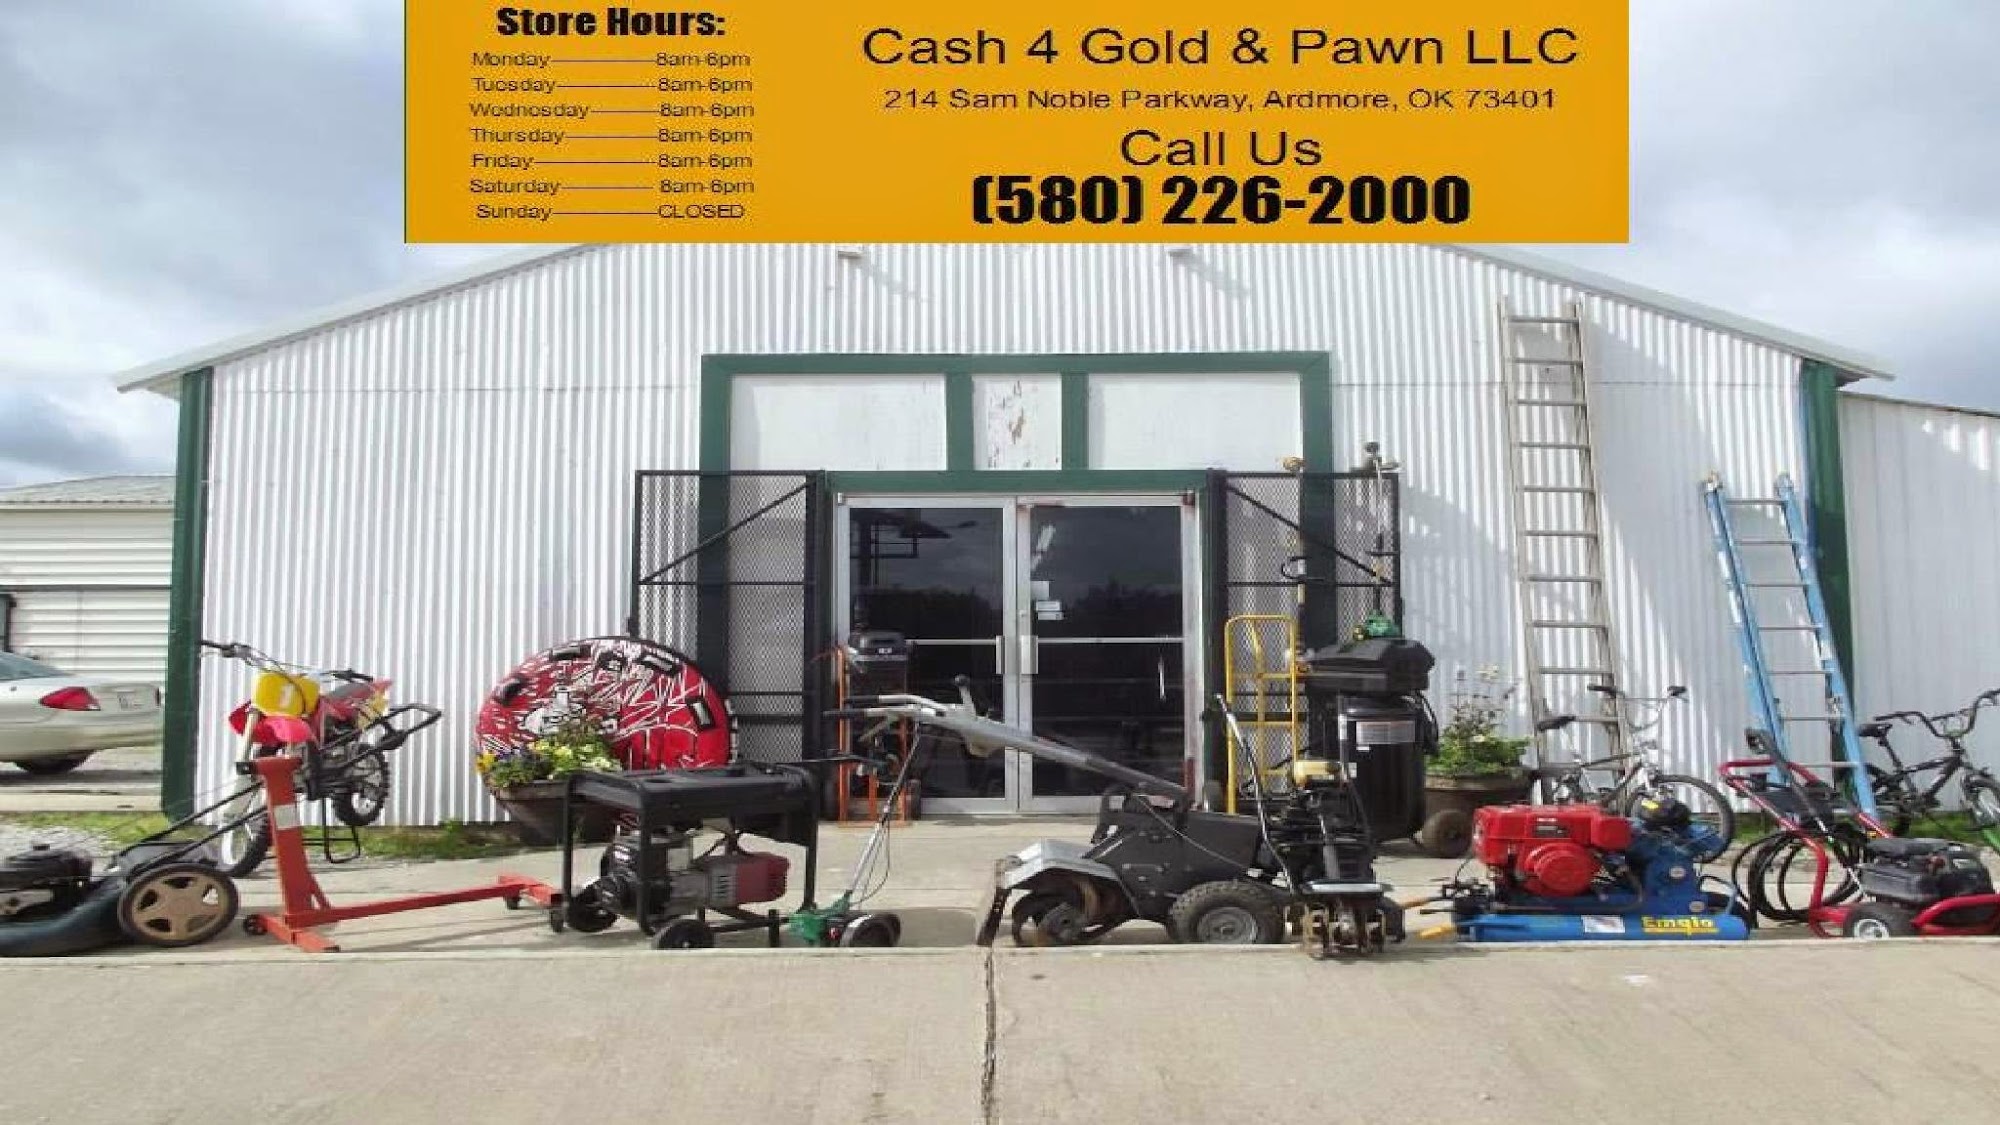 Cash 4 Gold & Pawn LLC